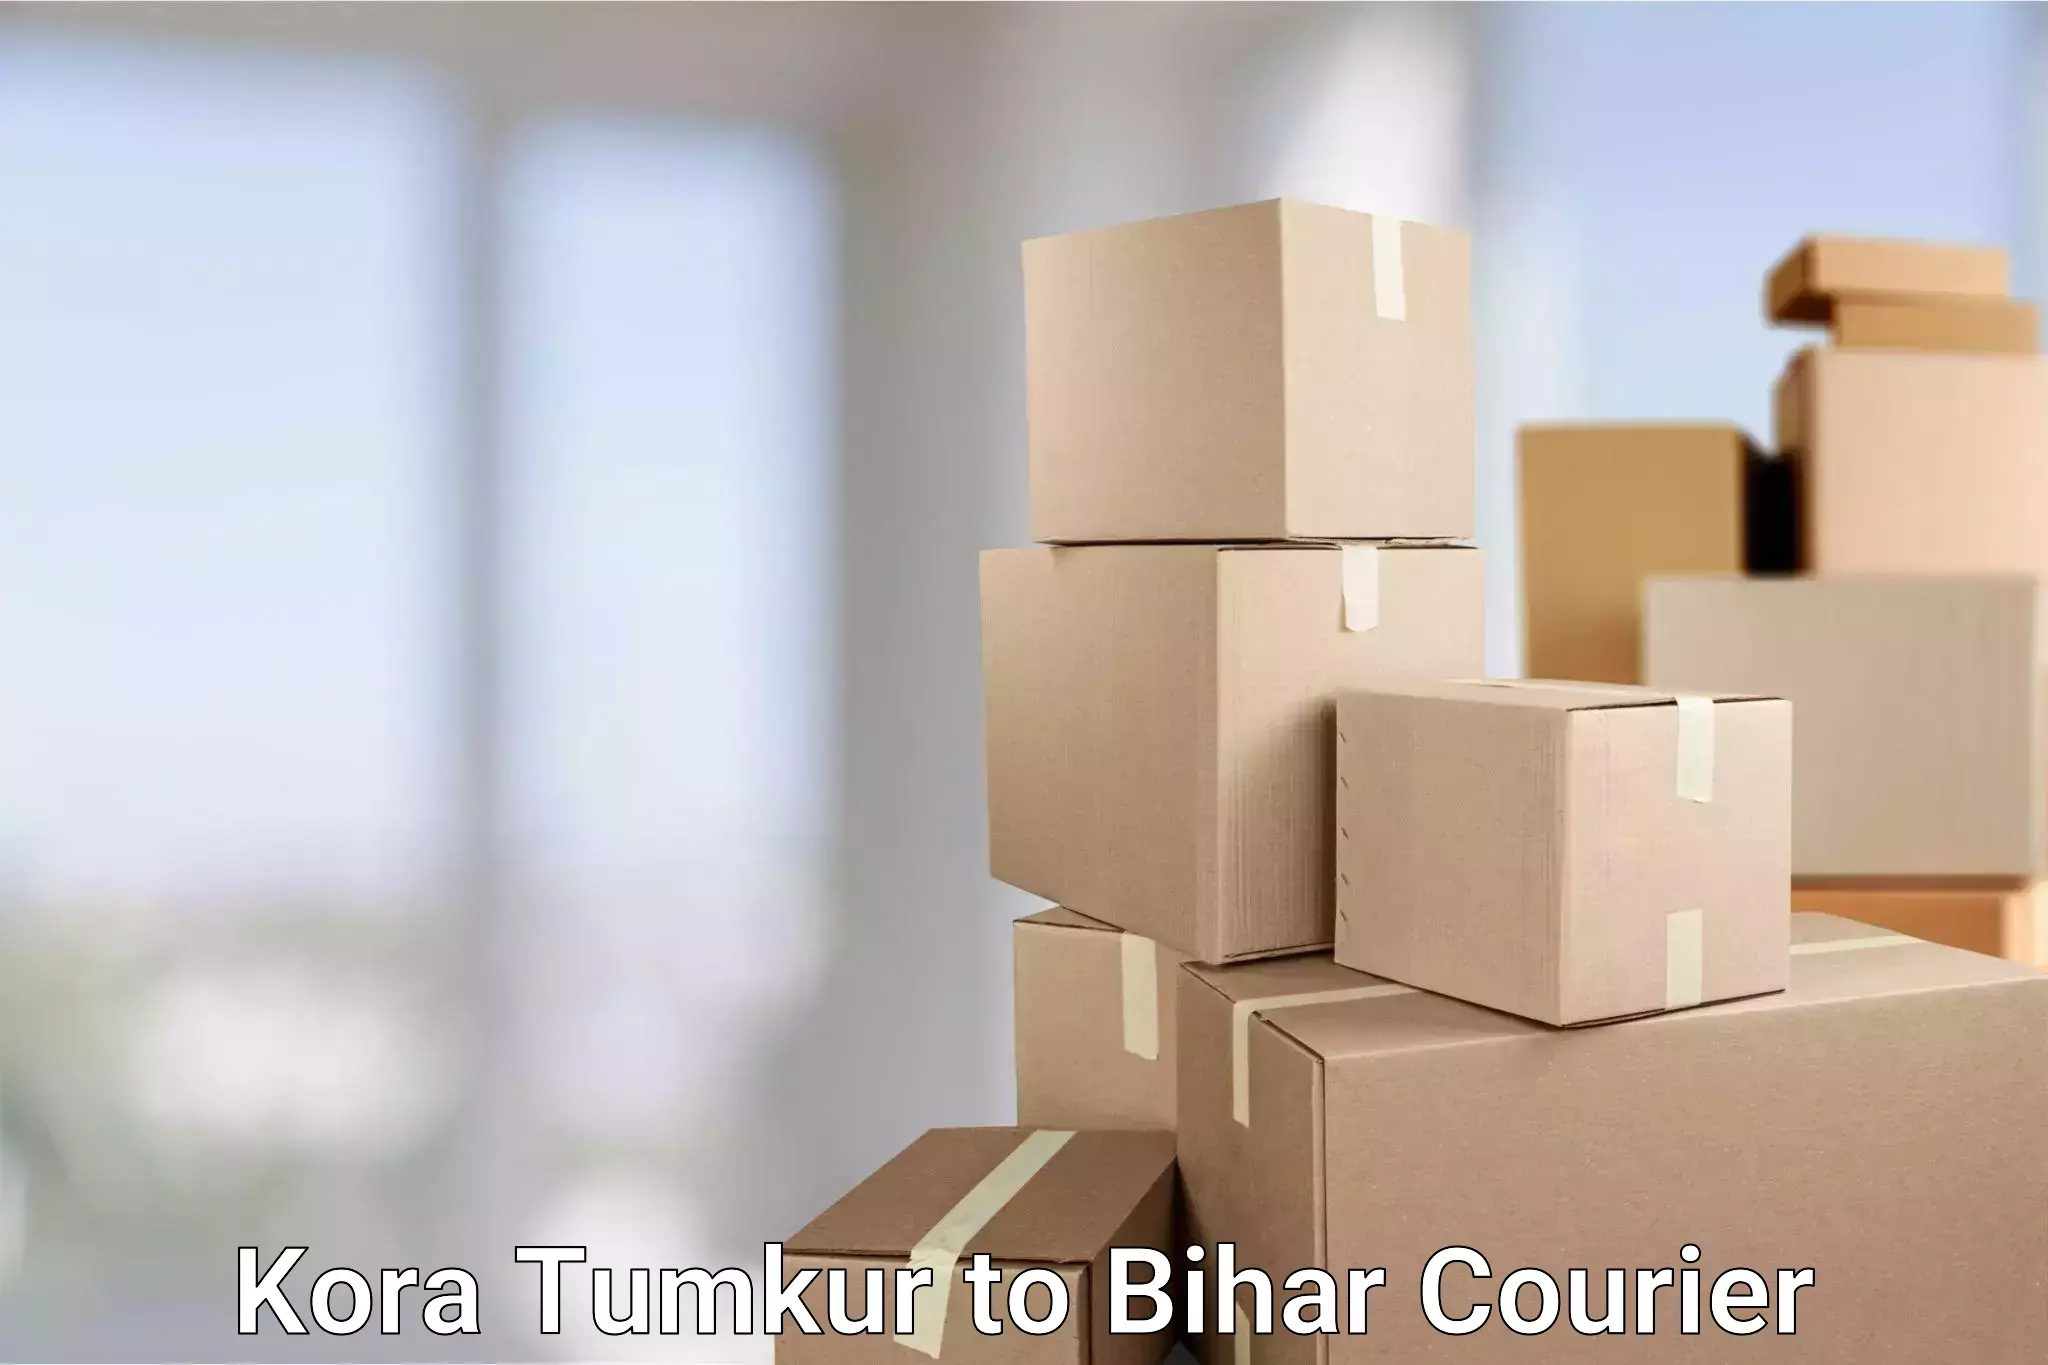 Efficient order fulfillment Kora Tumkur to Arwal